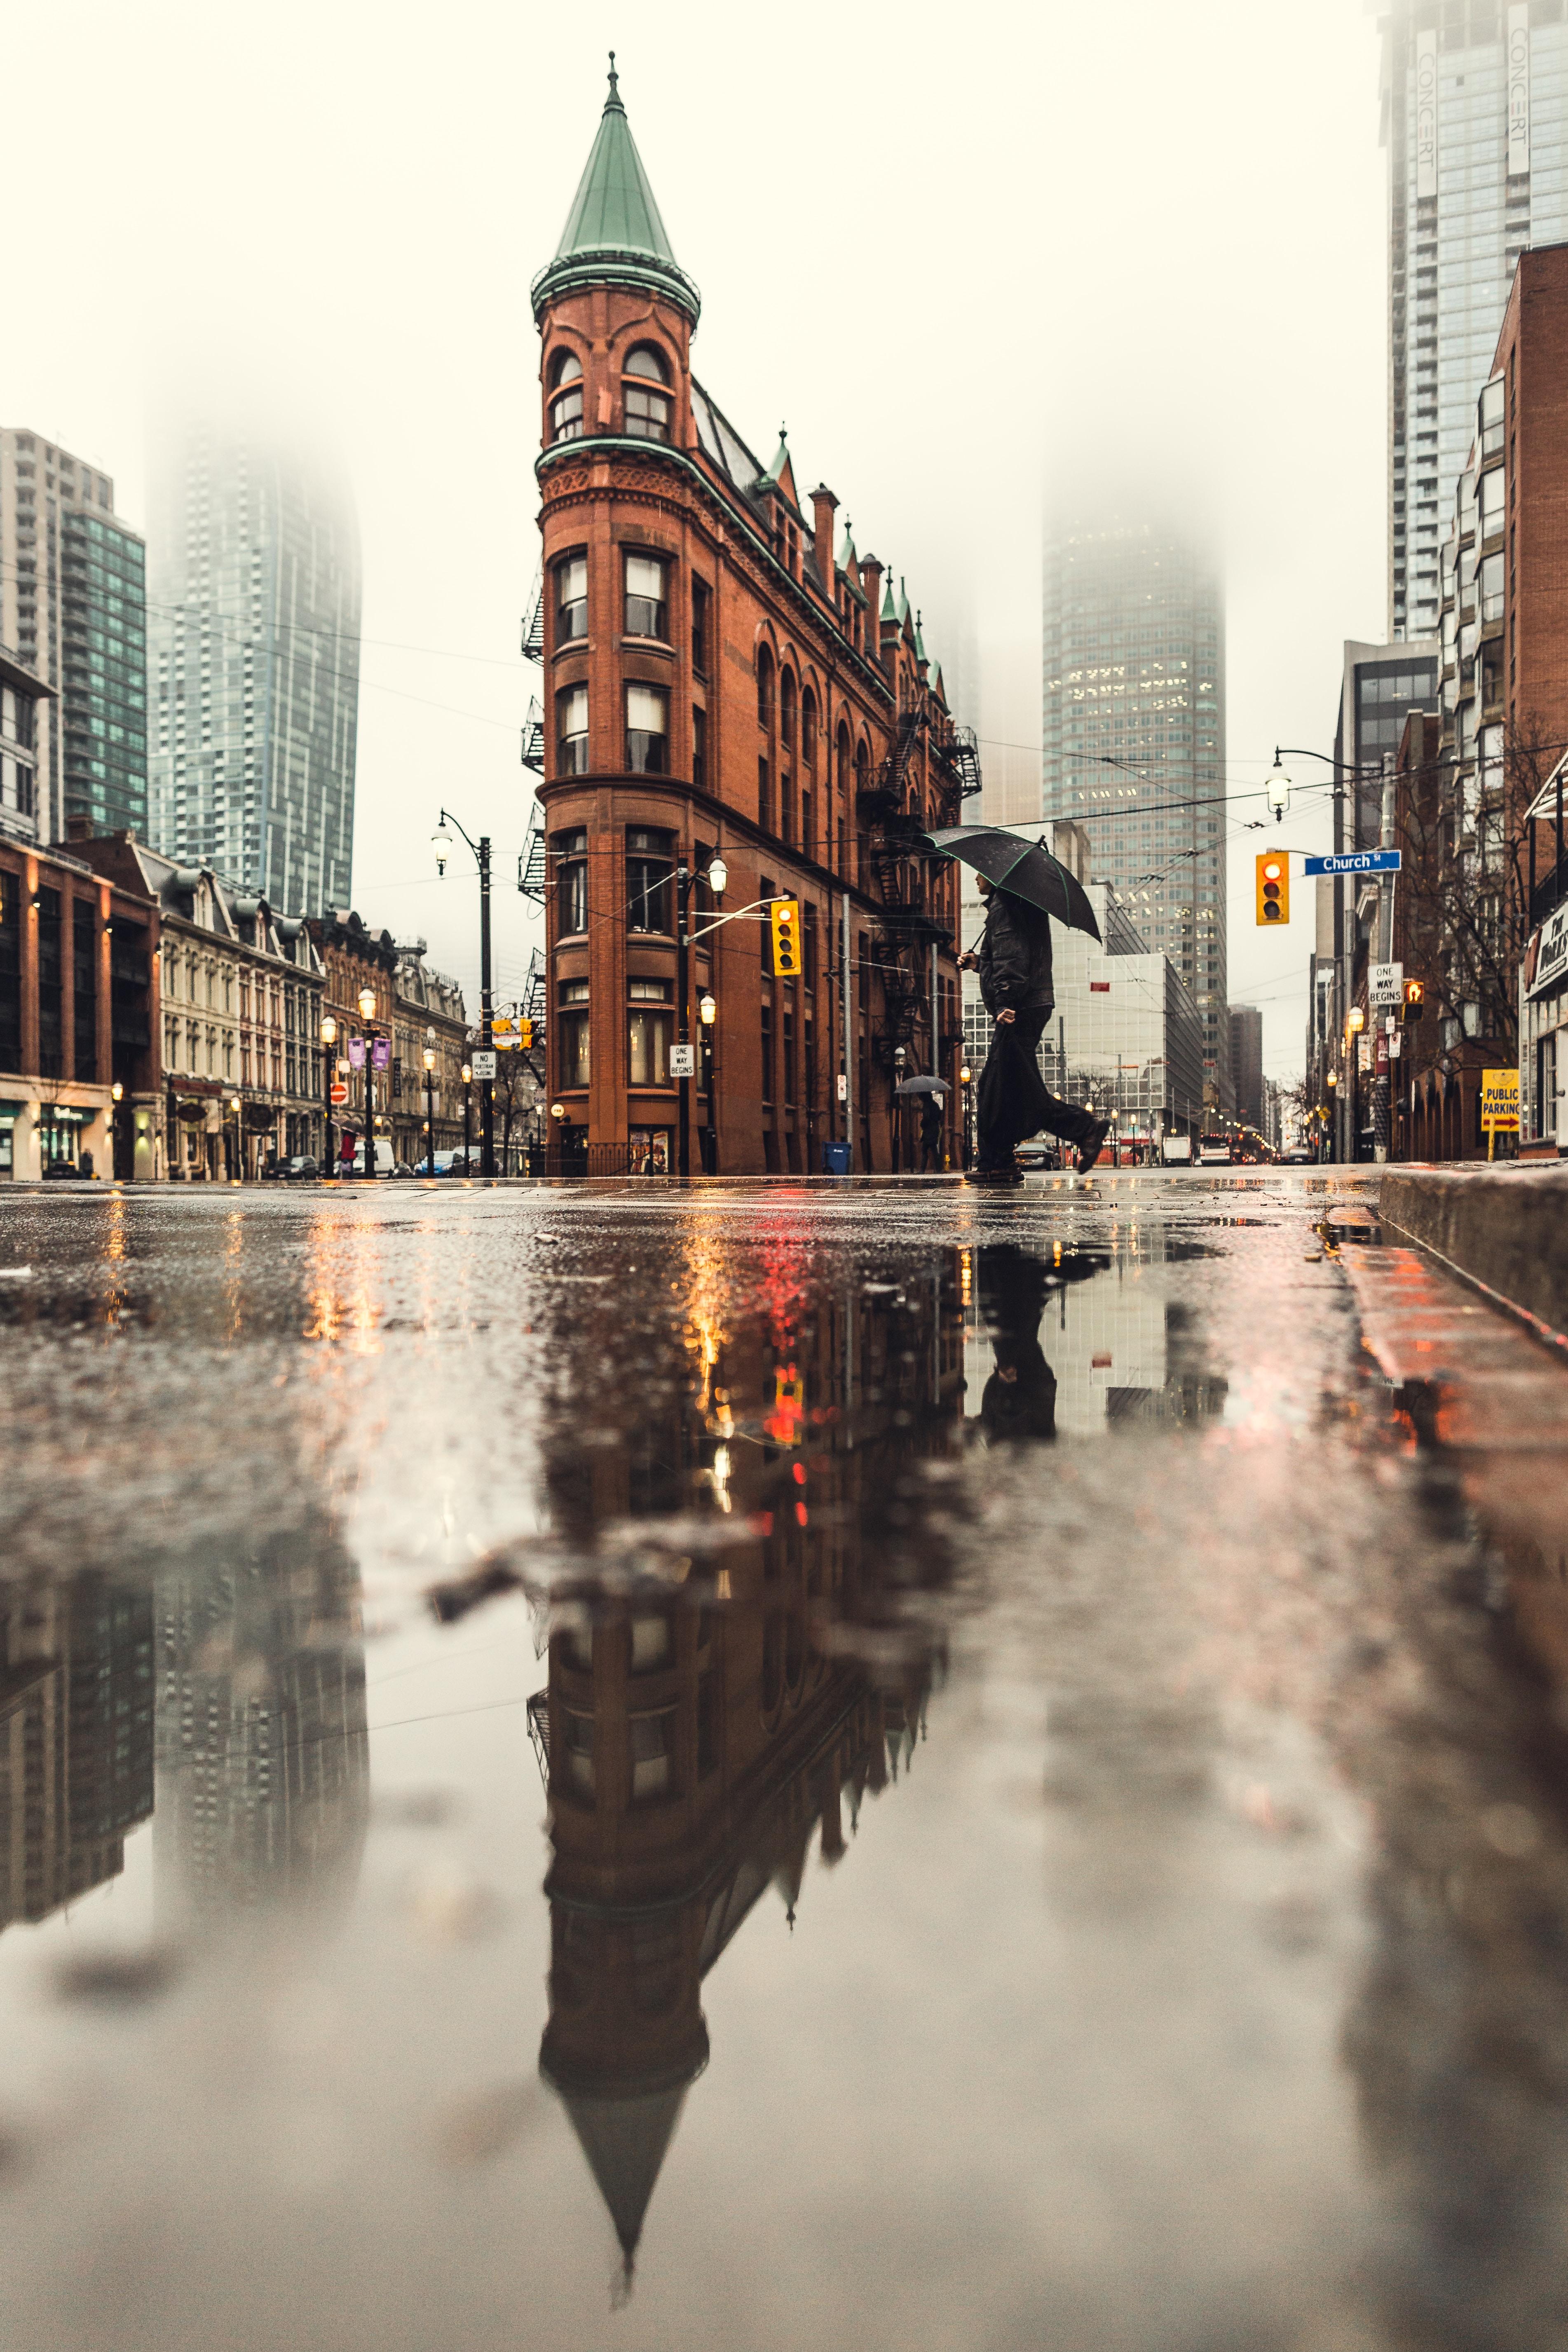 Toronto Picture [Stunning]. Download Free Image